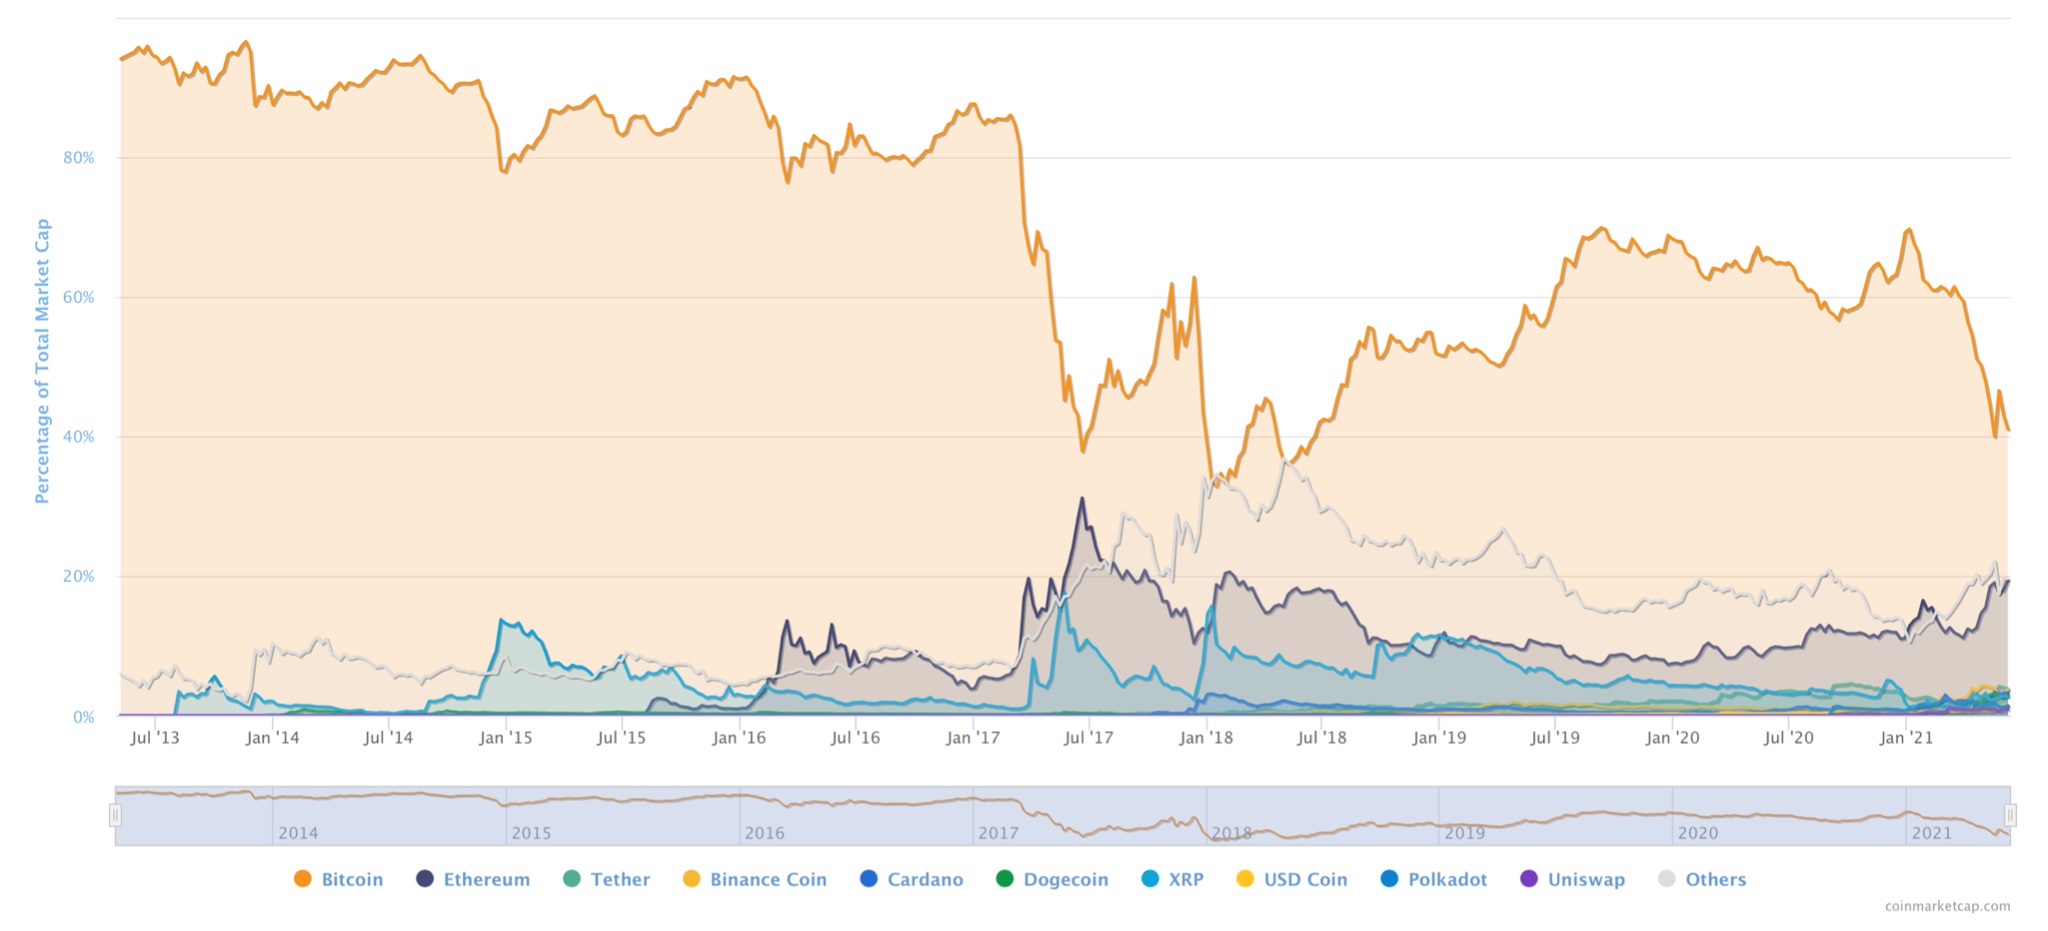 Total Crypto Market Cap - Bitcoin vs Ethereum